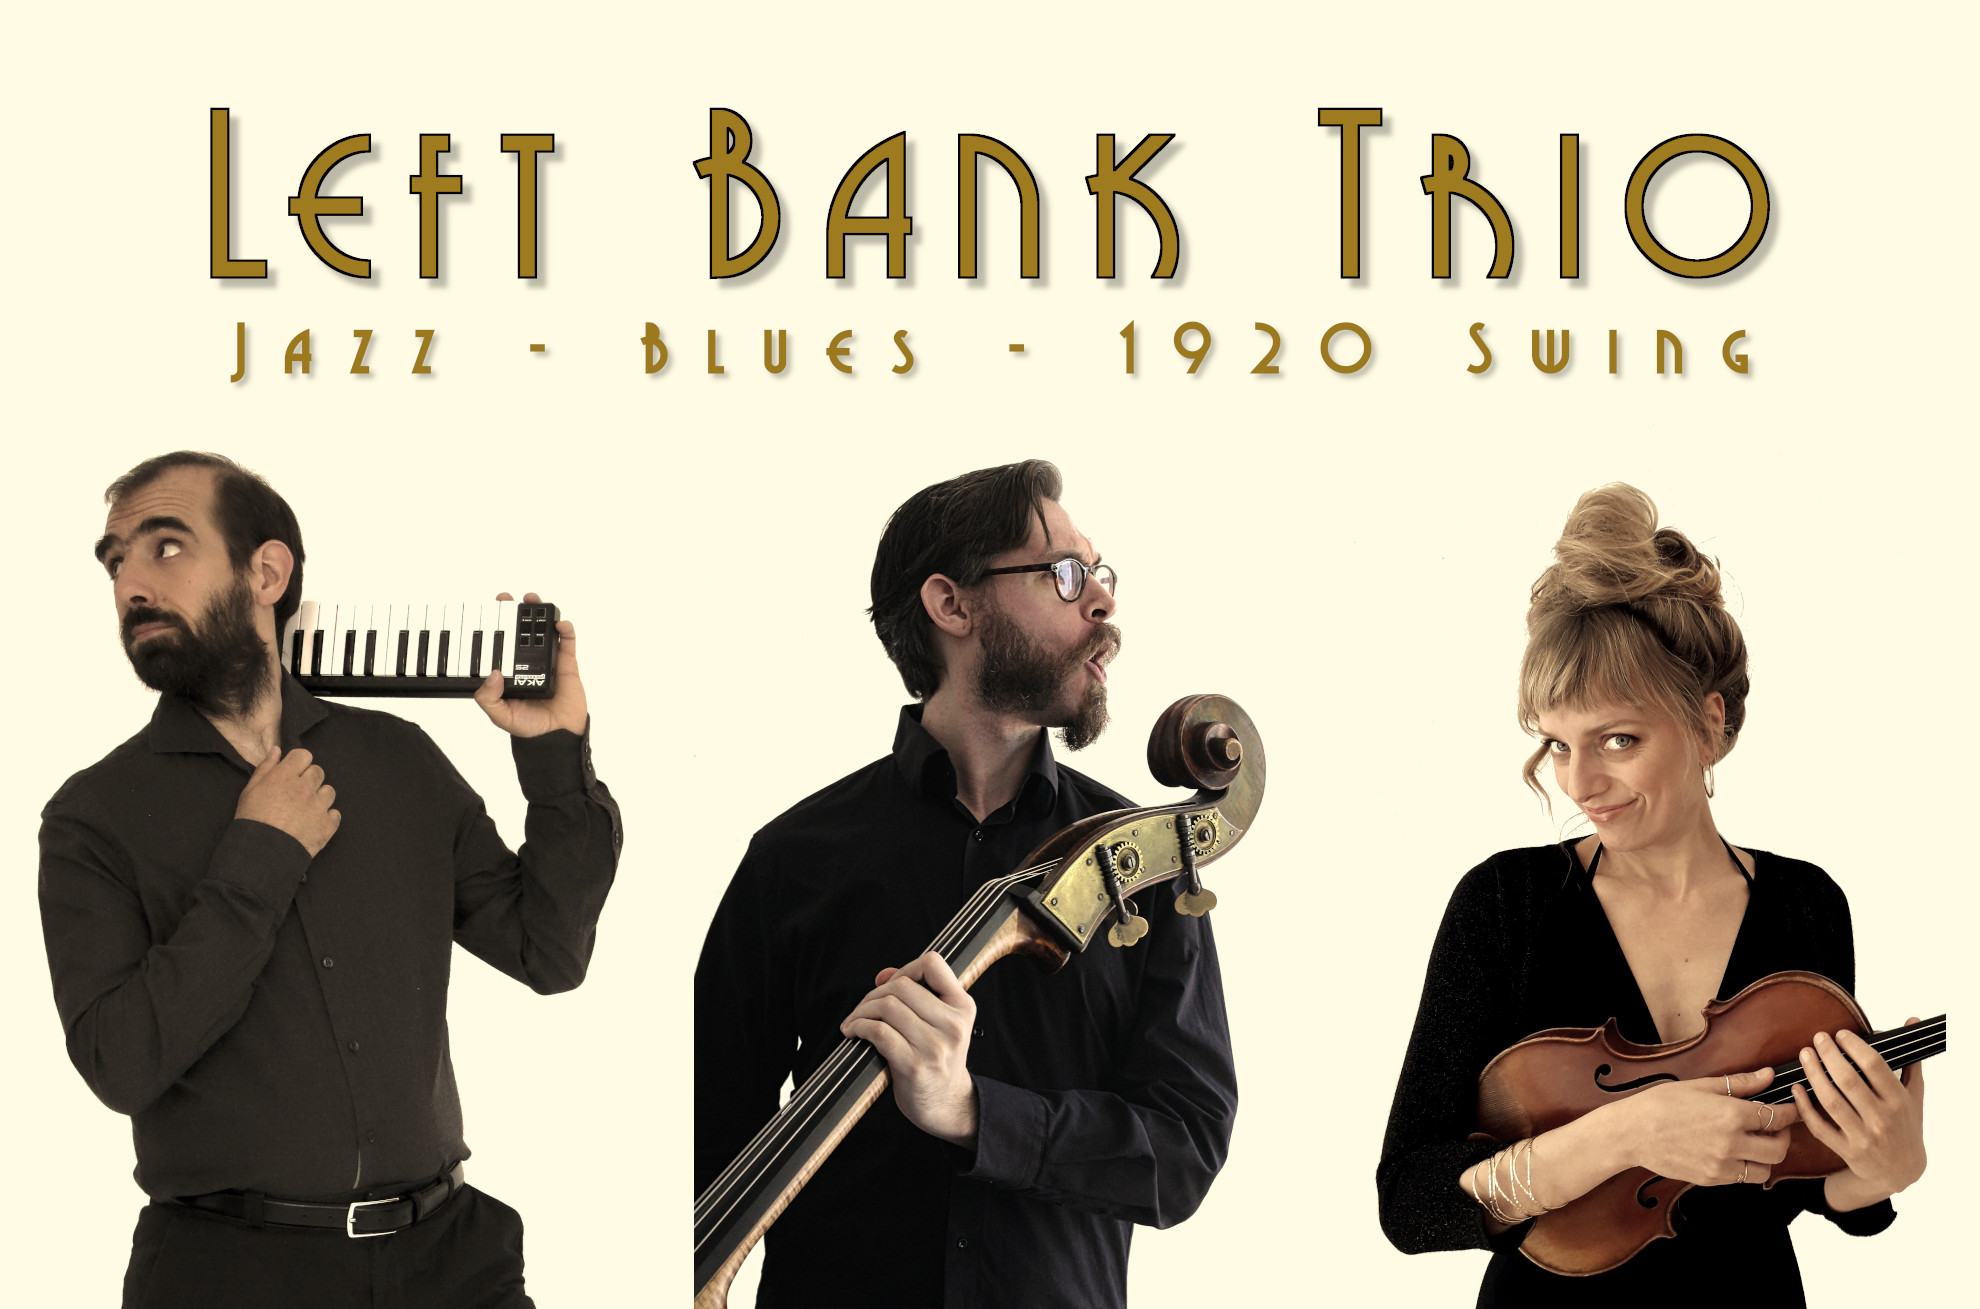 Left-Bank-Trio, Jazz - Blues - 1920s Swing